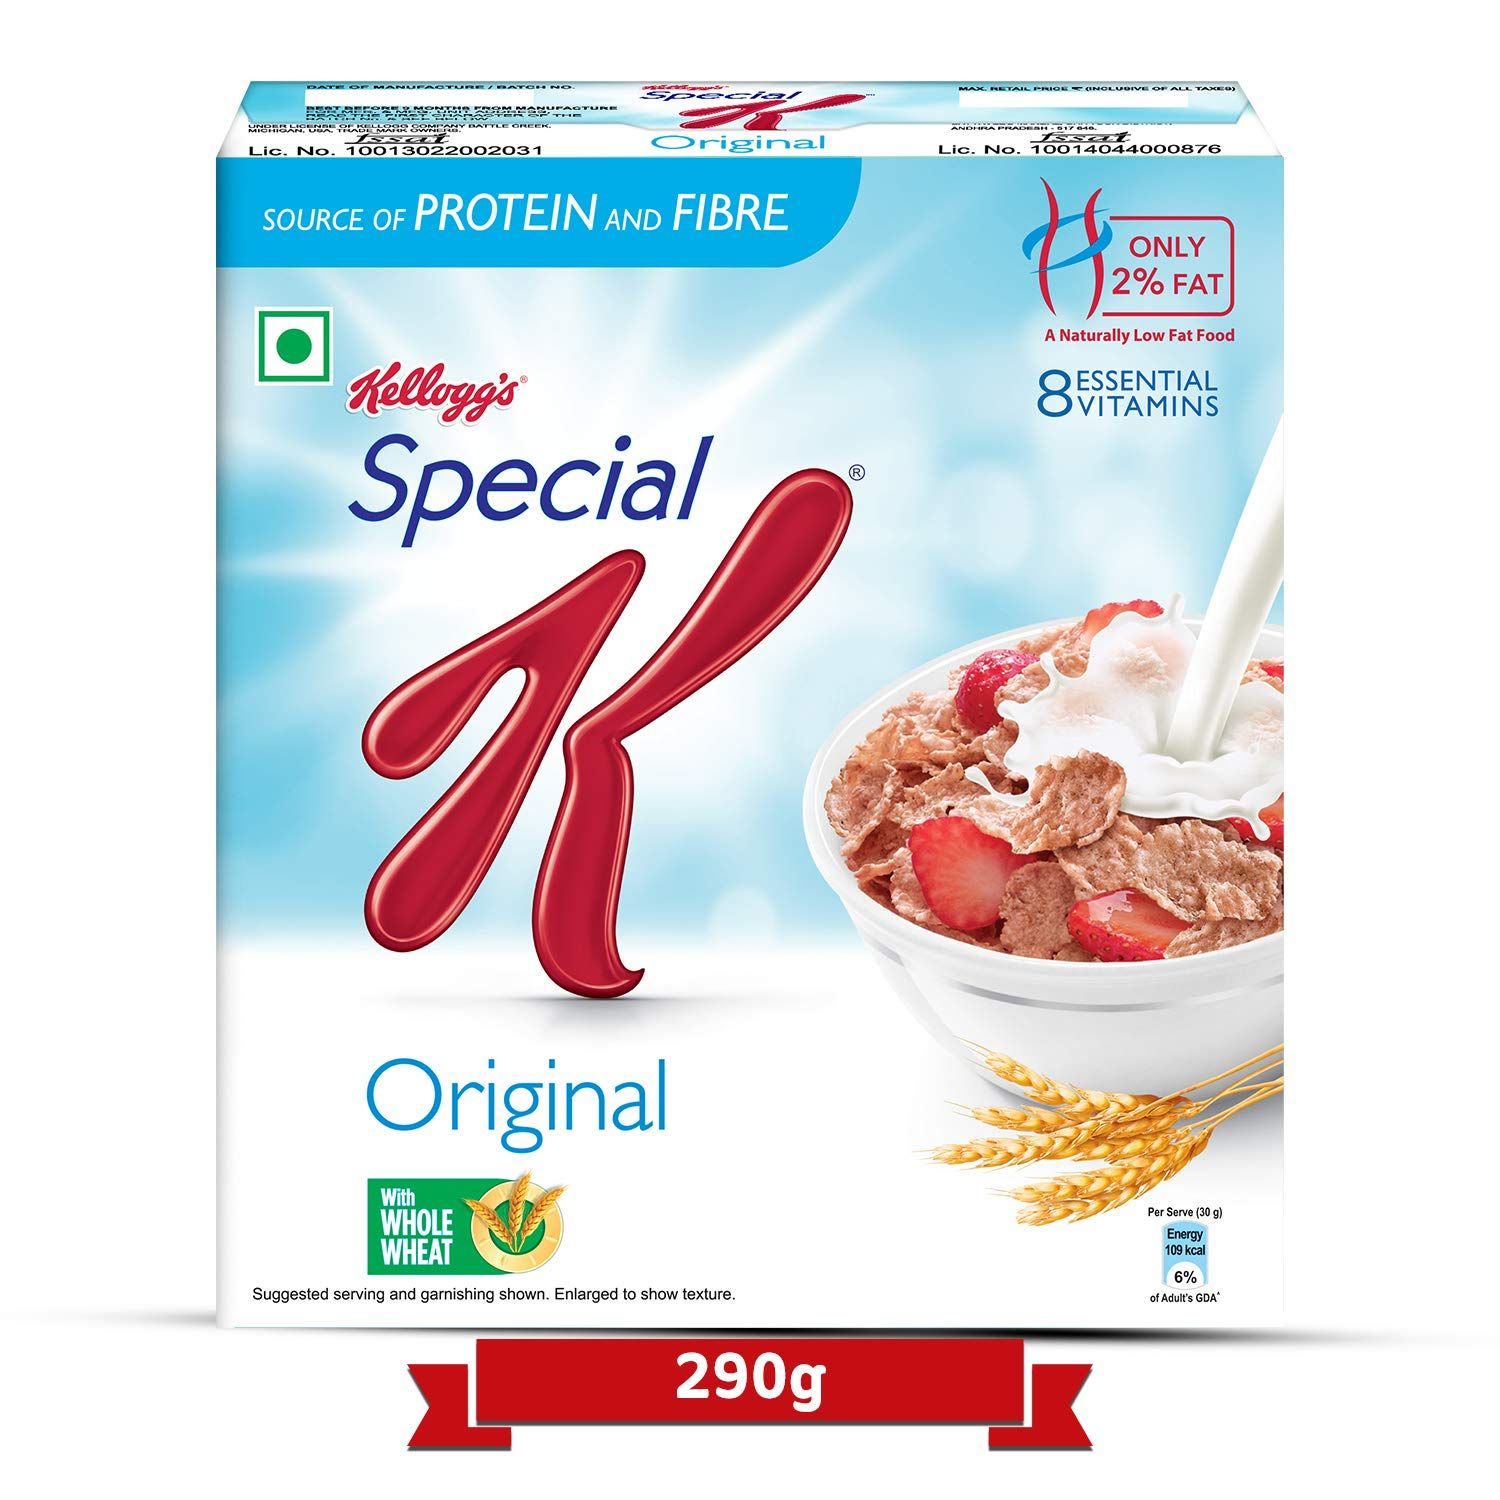 Kellogg's Original Special K Image